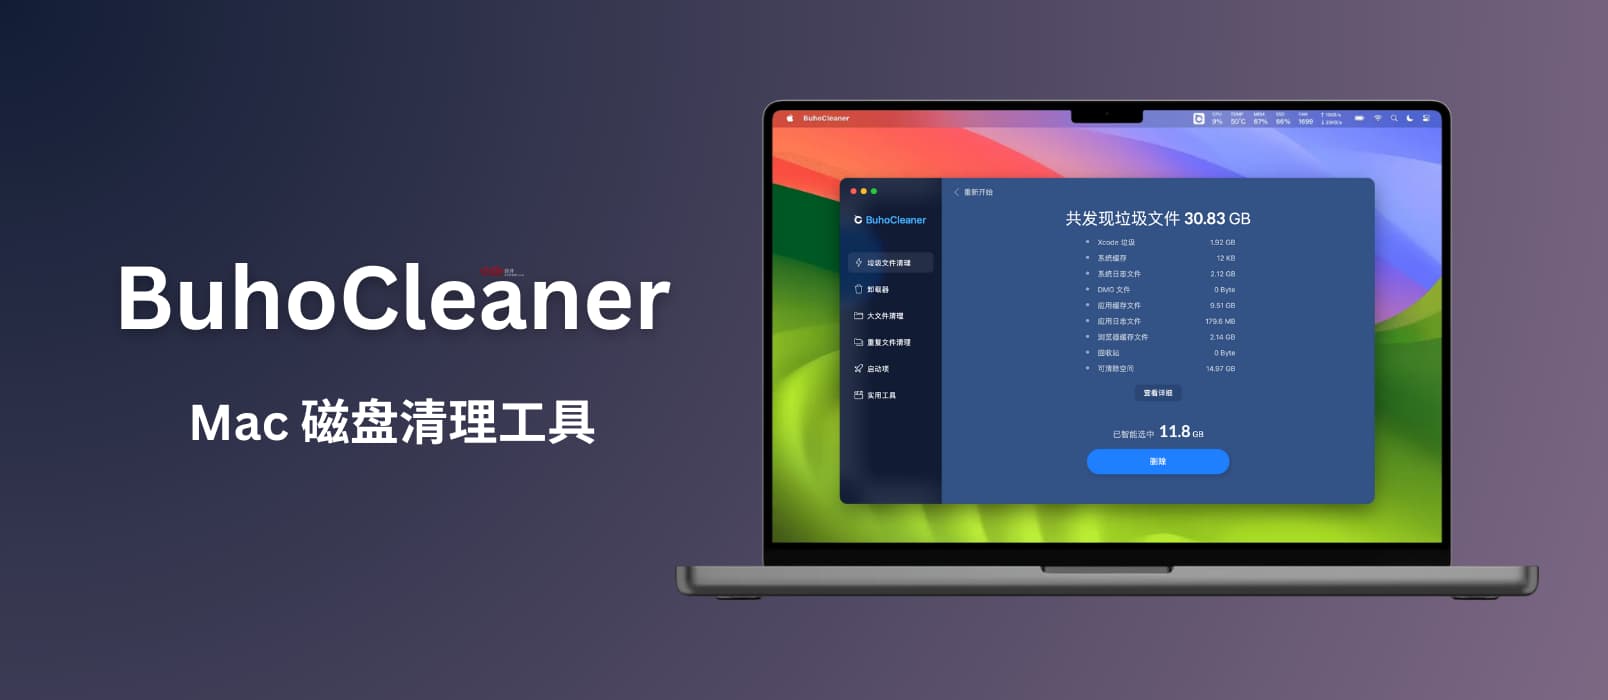 BuhoCleaner – 简洁优雅的 Mac 磁盘清理工具